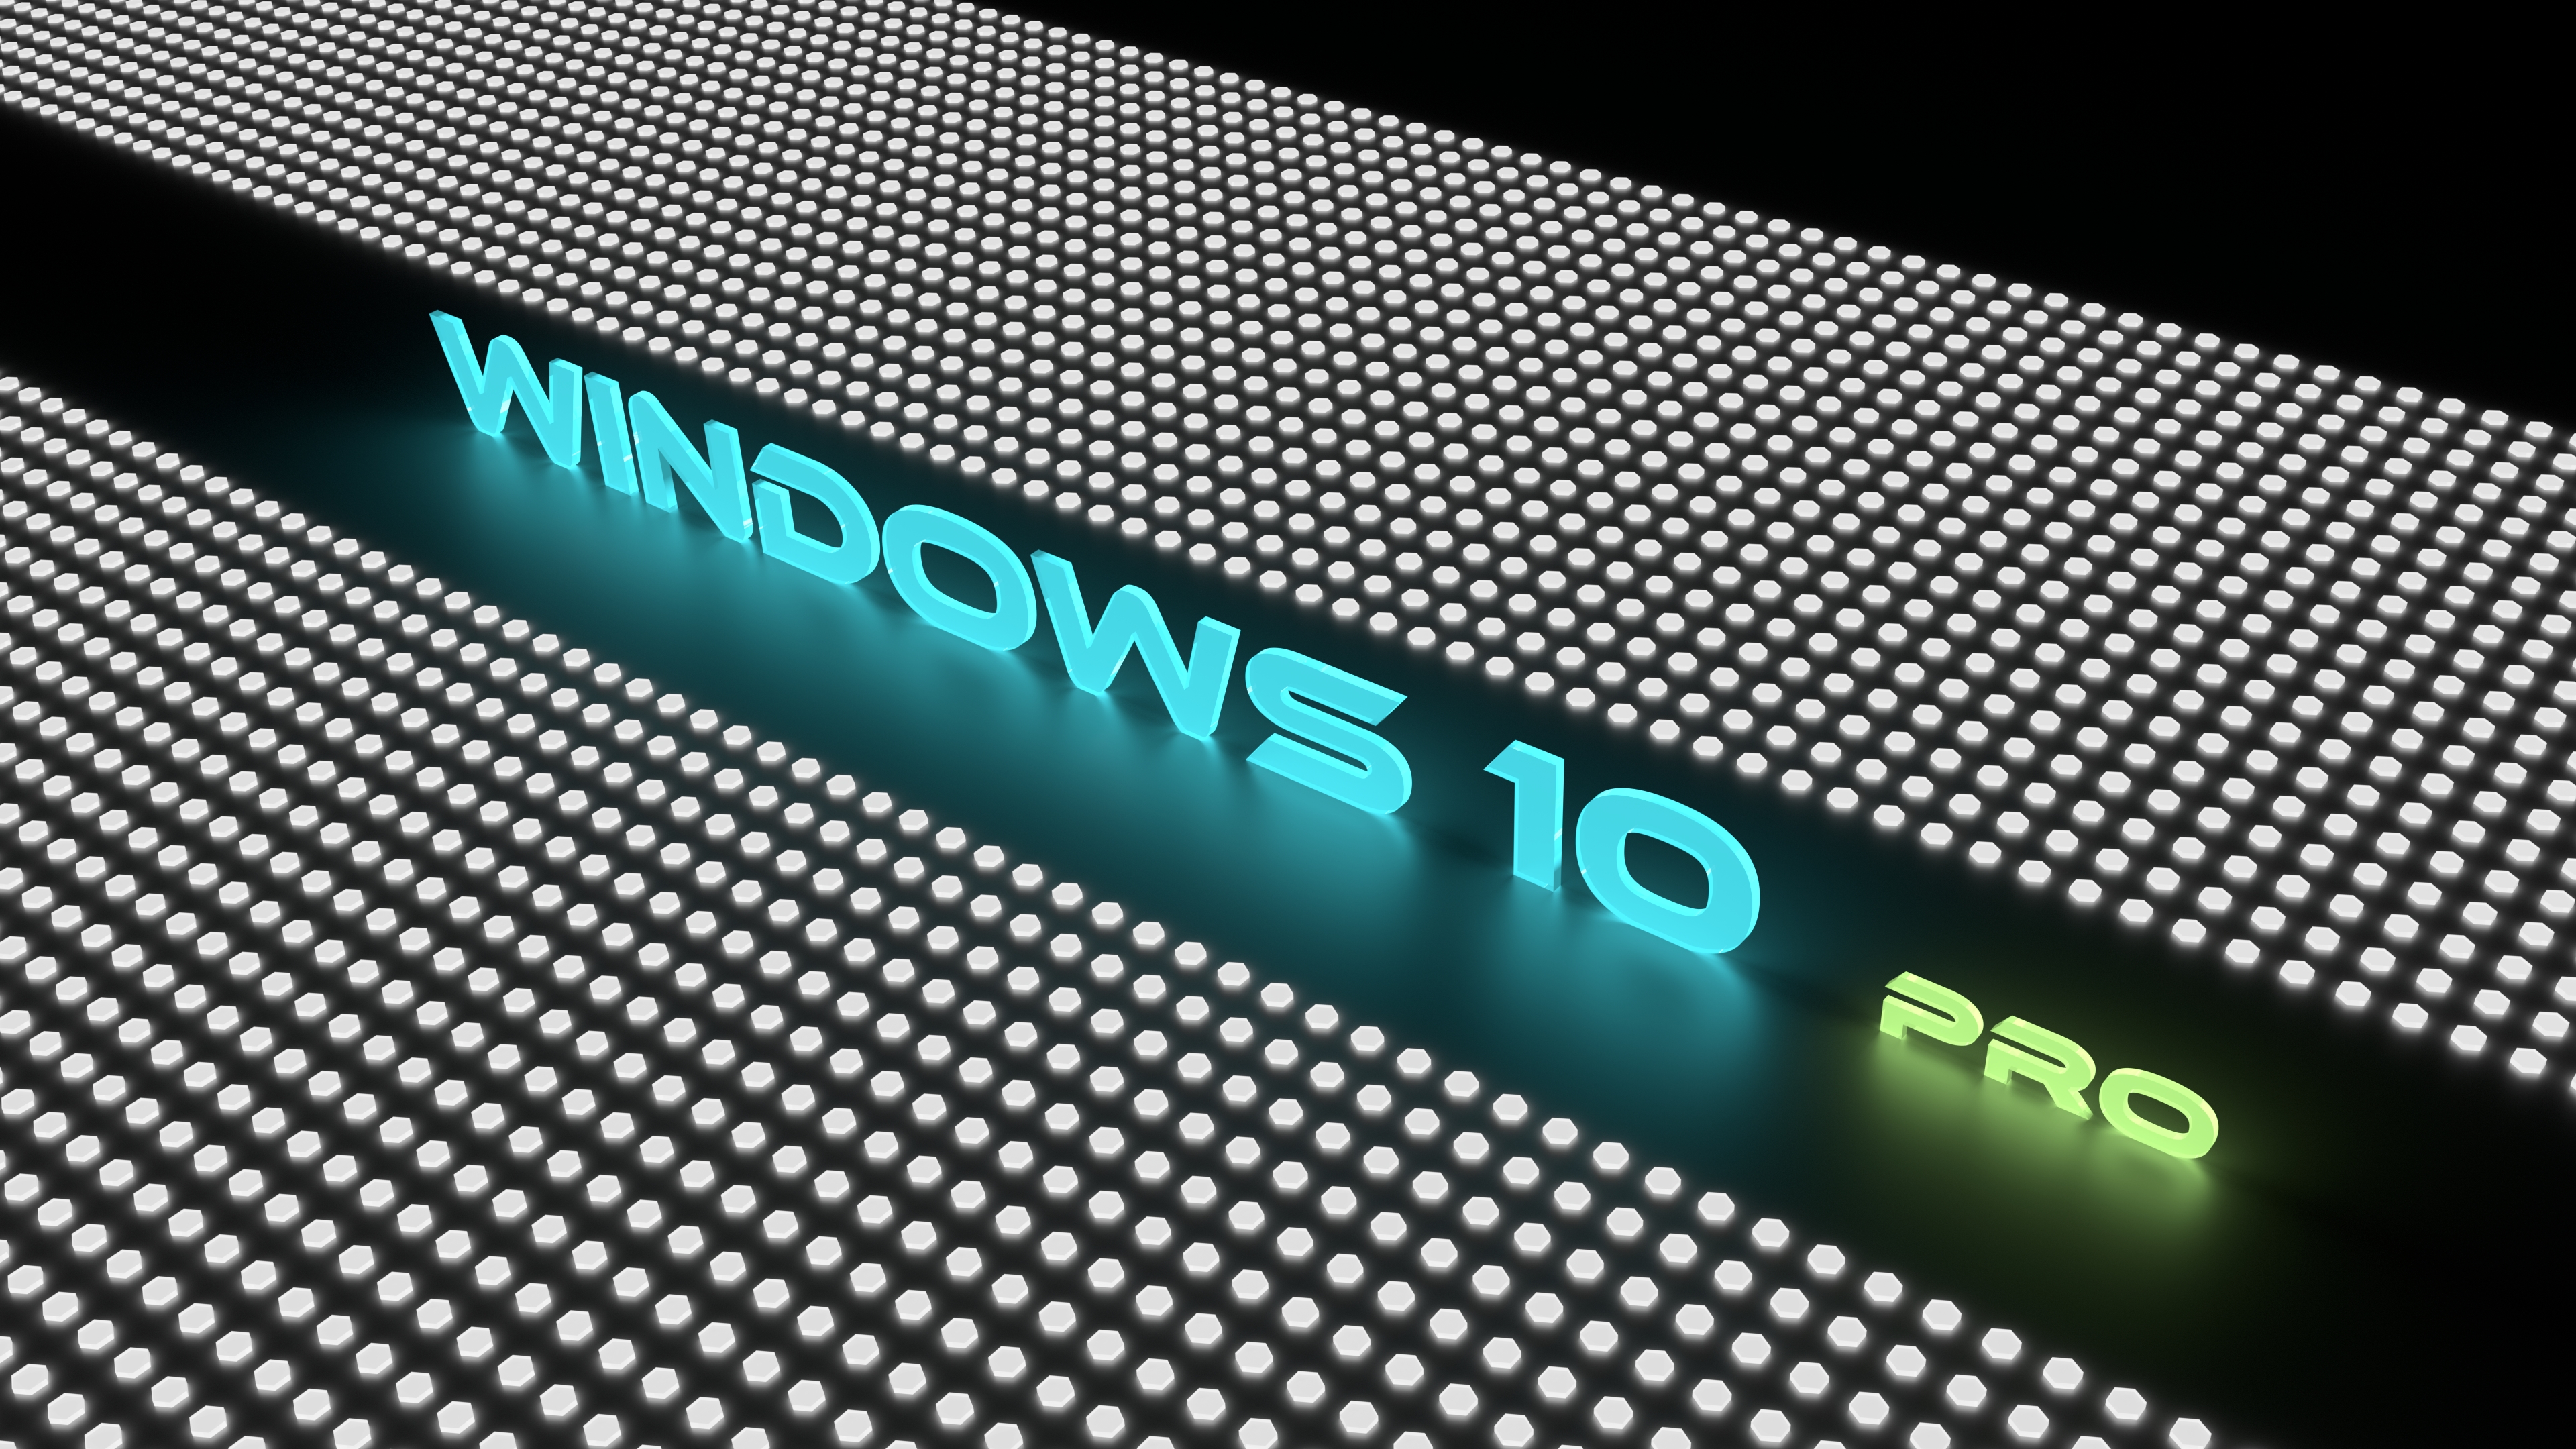 windows 10, technology, windows